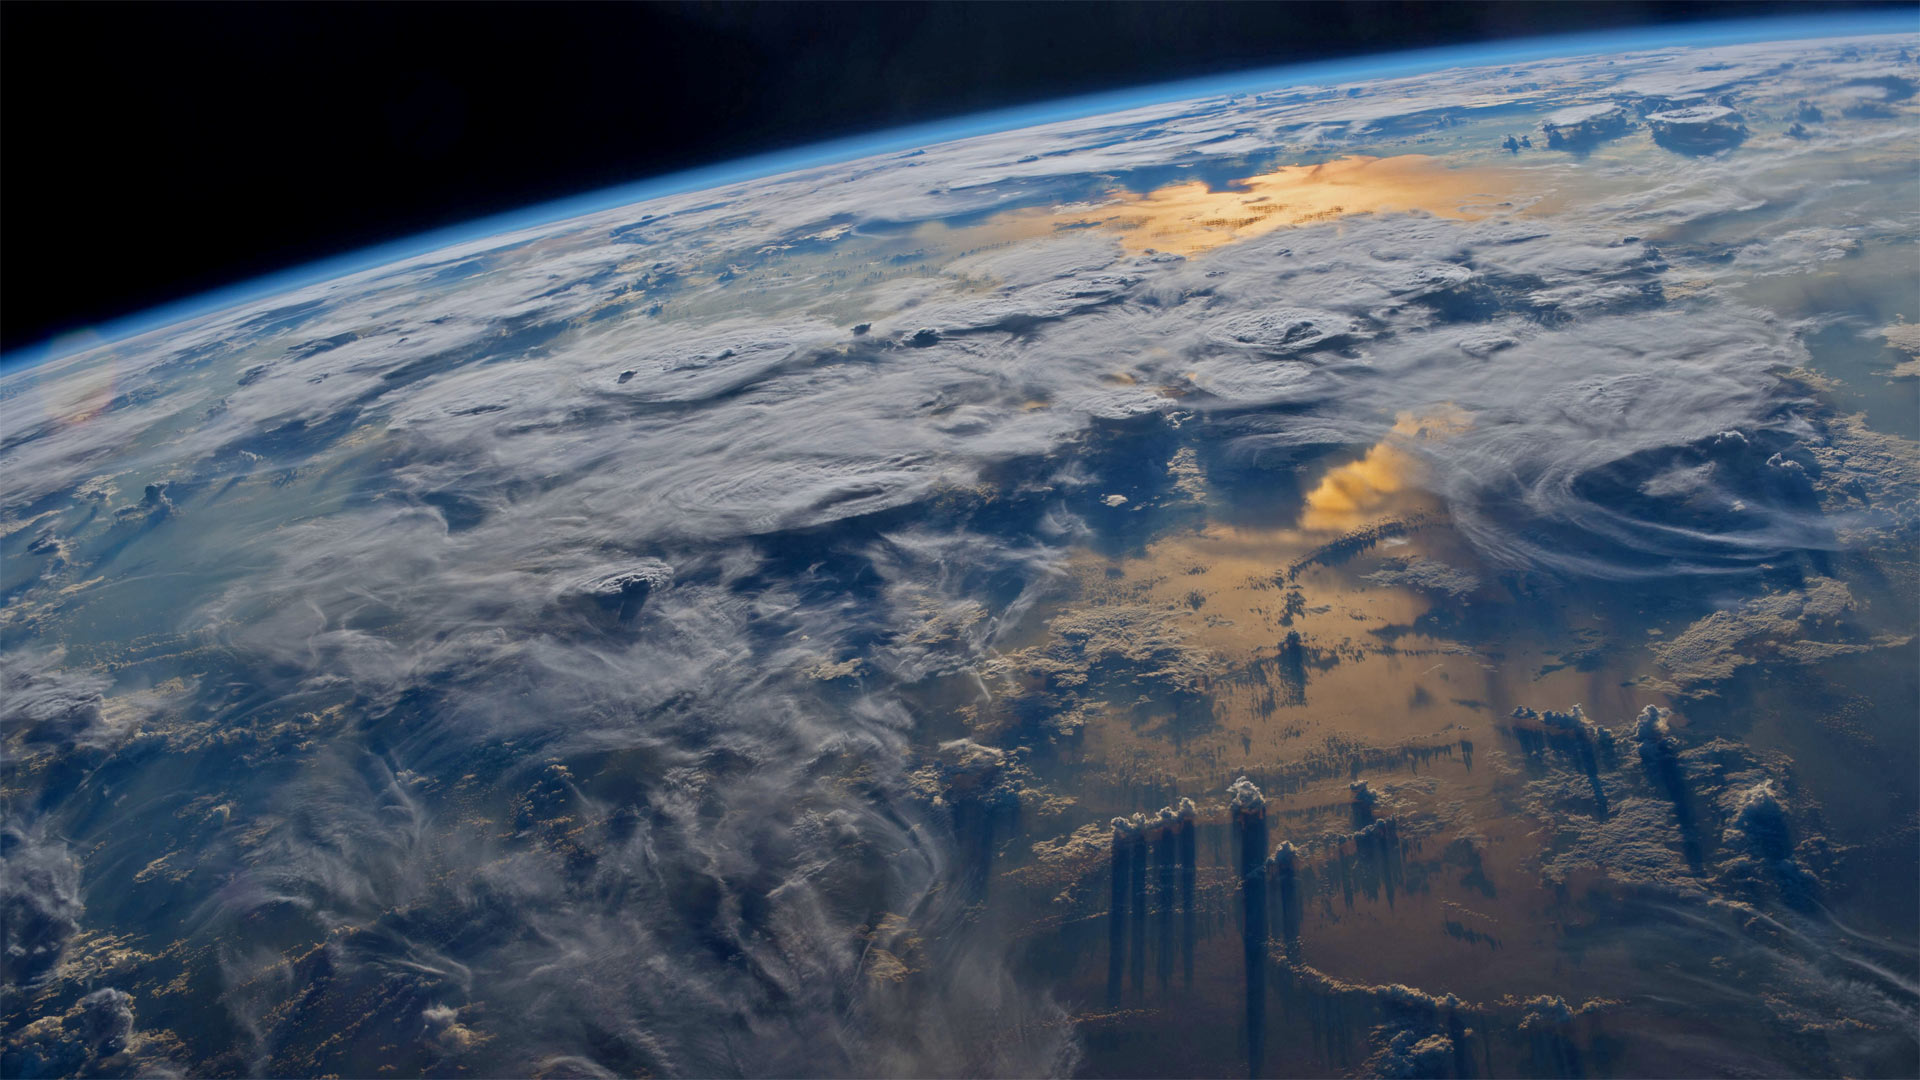 https://dickies.myds.me:56789/wp-content/uploads/2021/03/20210412@宇航员杰夫·威廉姆斯在国际空间站拍摄到的地球-©JeffWilliams_NASA.jpg